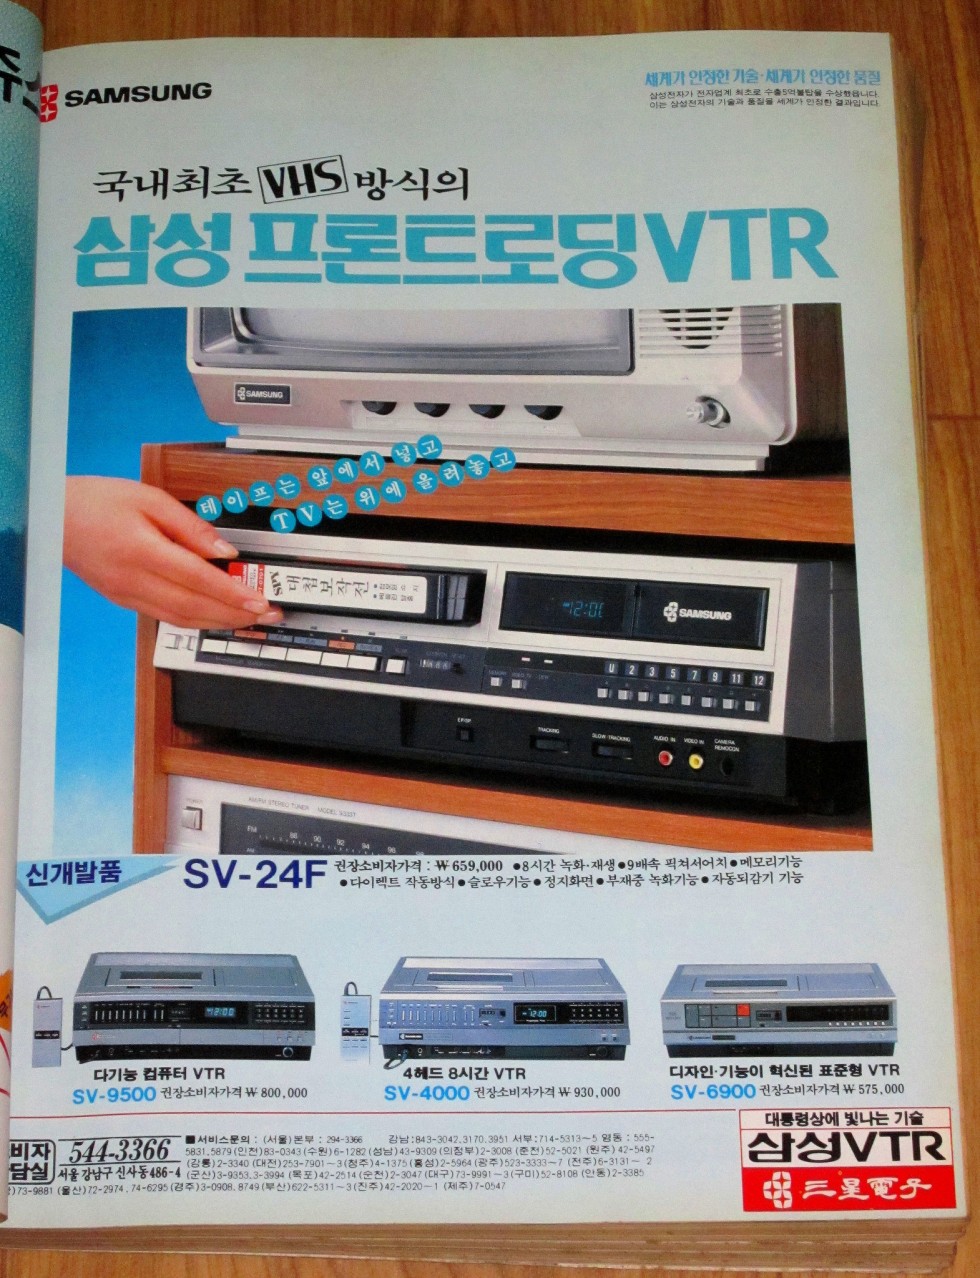 Vintage South Korean Samsung VCR Ad 1989